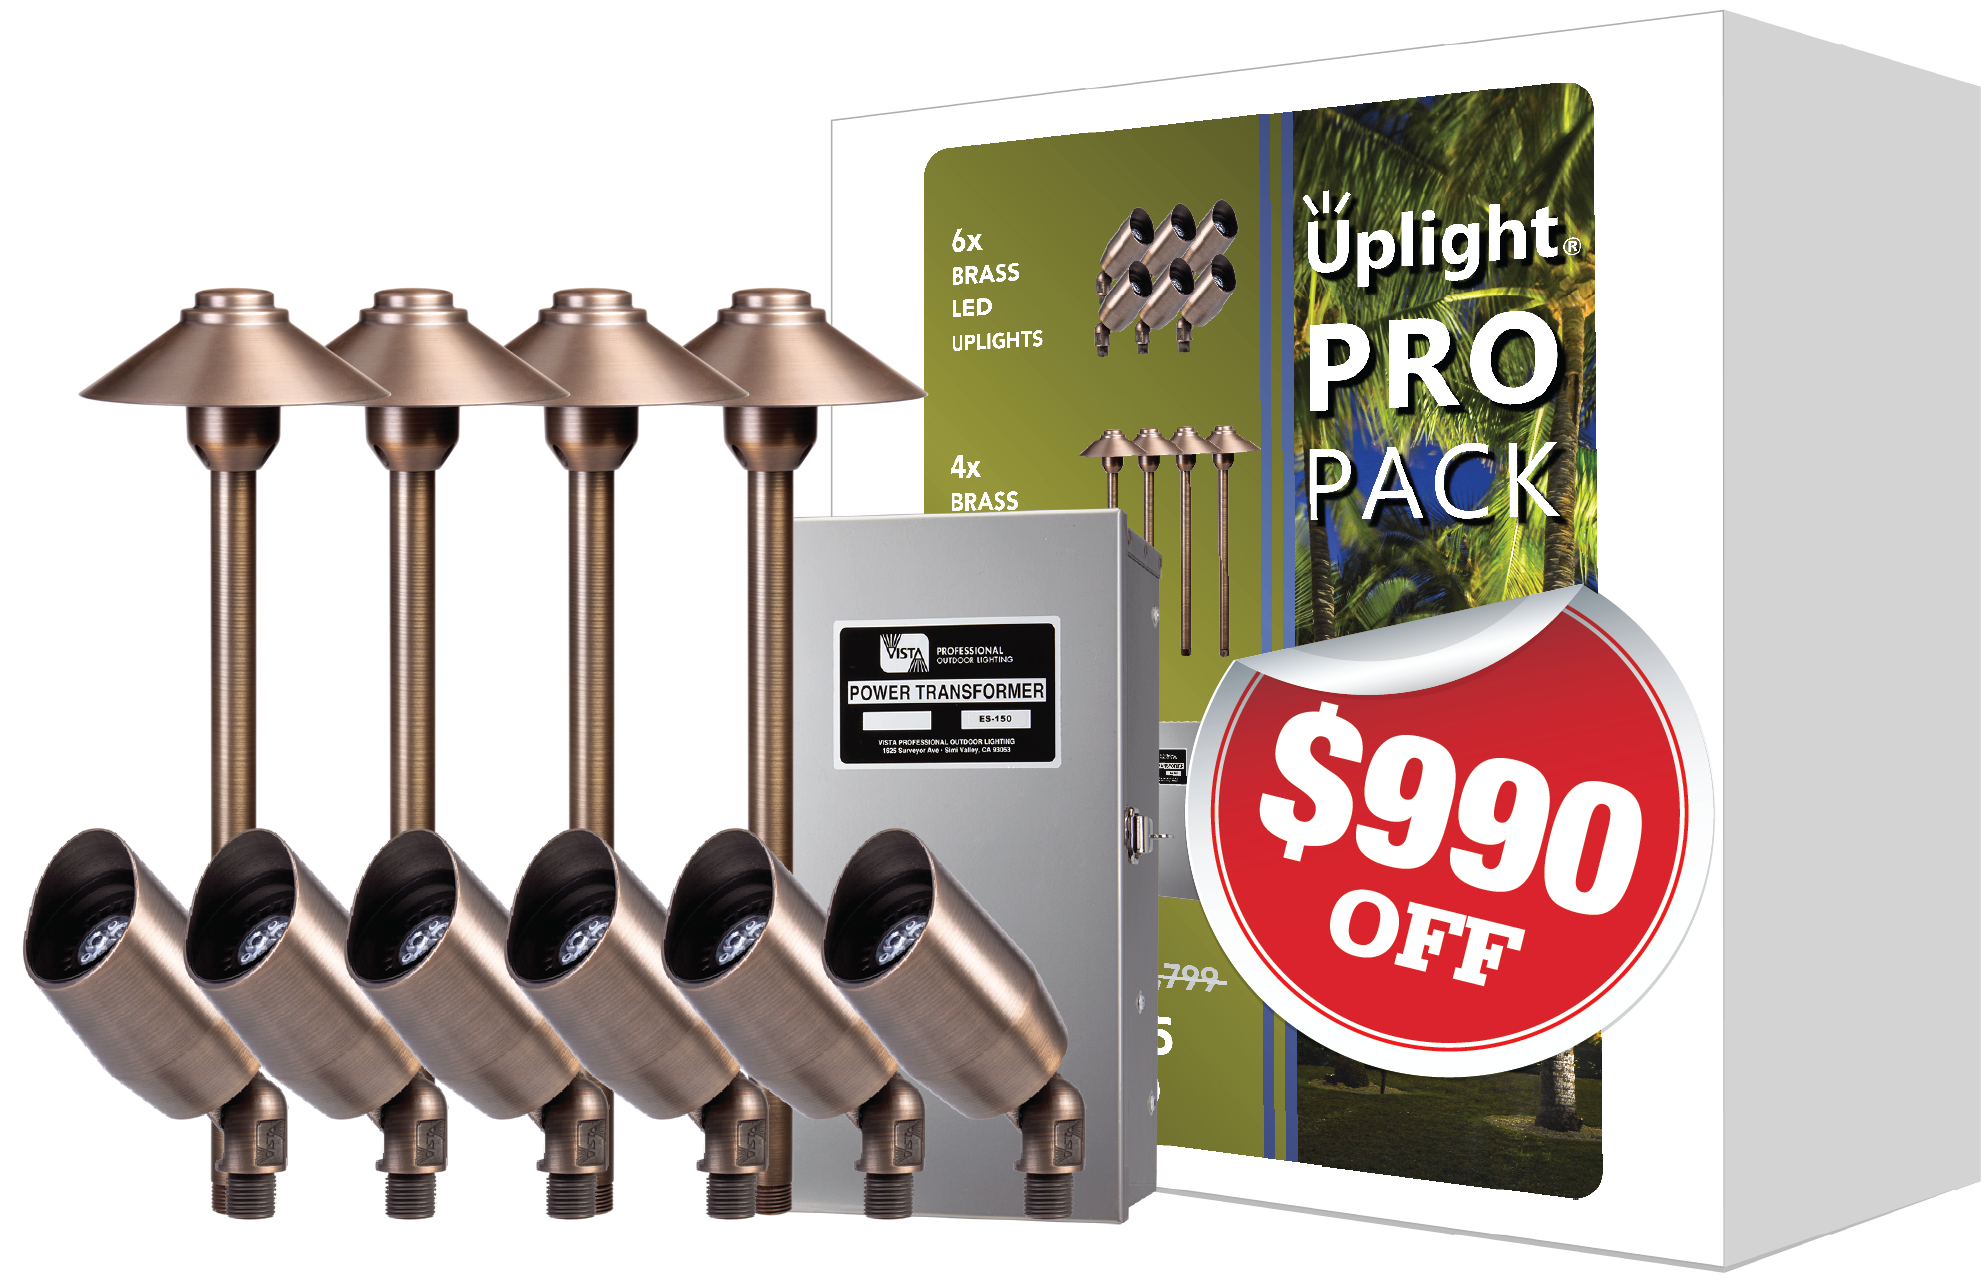 Uplight Pro Truck & Web Site Offer $2,495